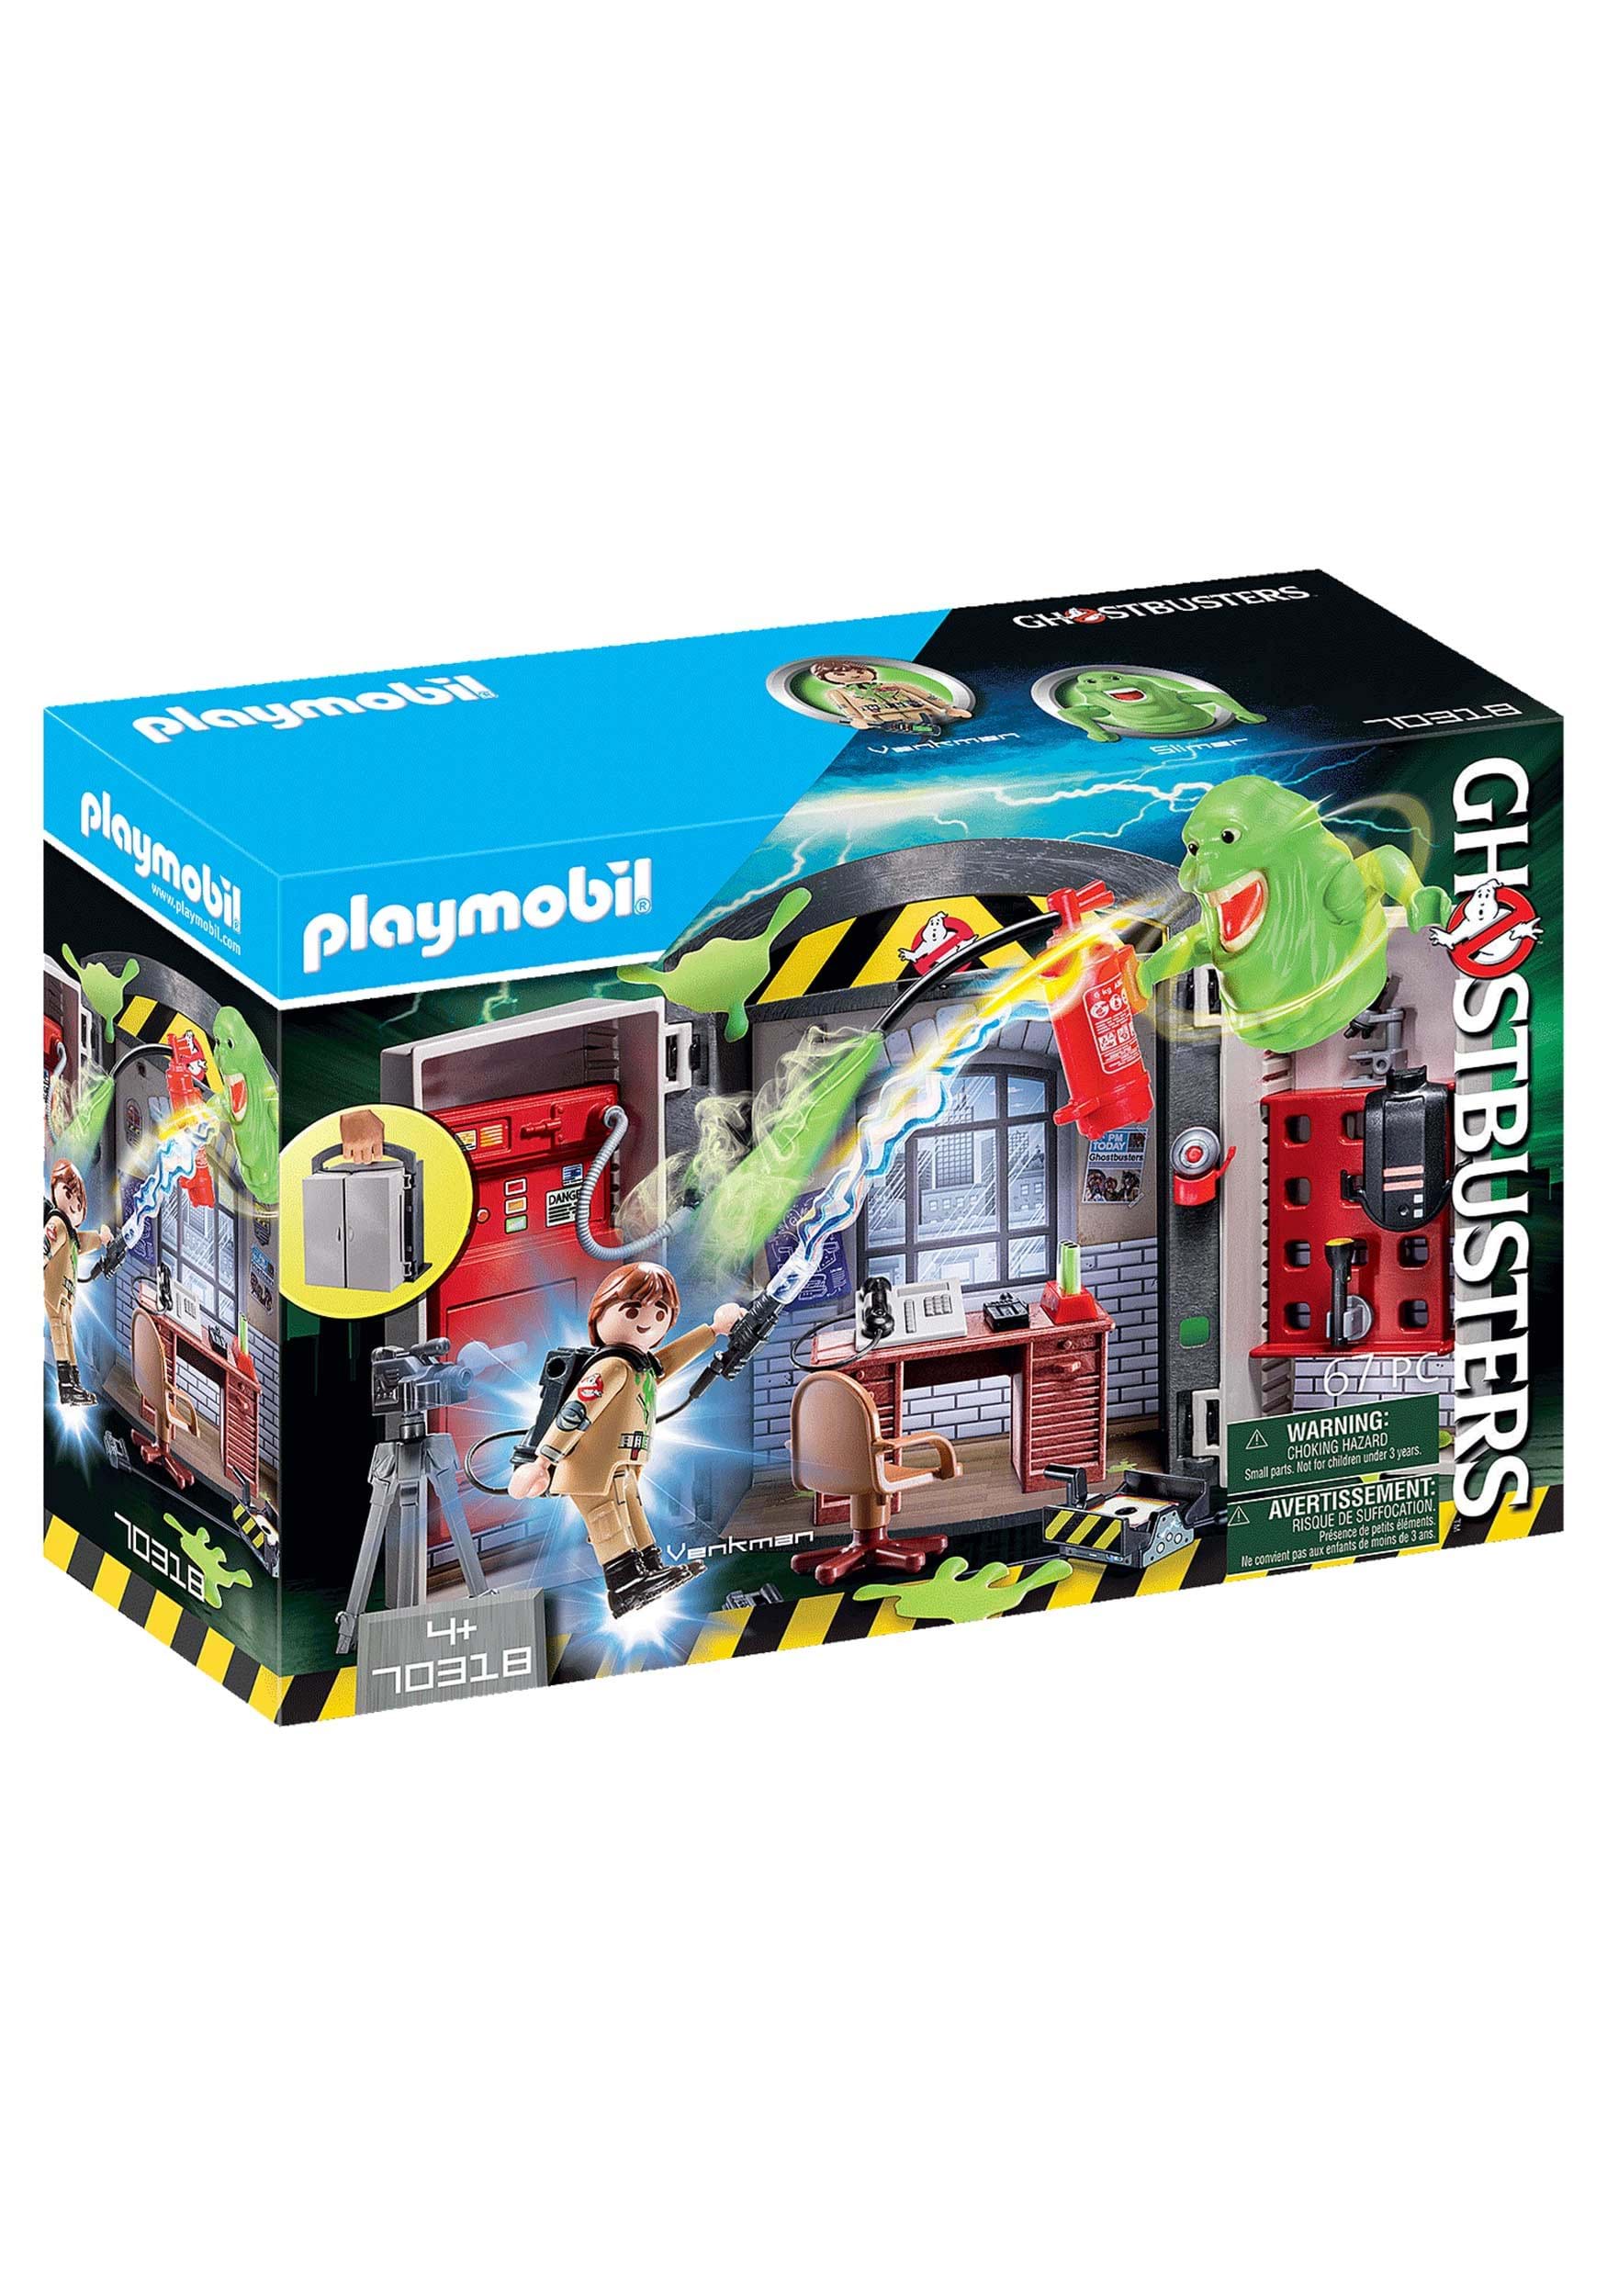 Playmobil - Ghostbusters™ Play Box